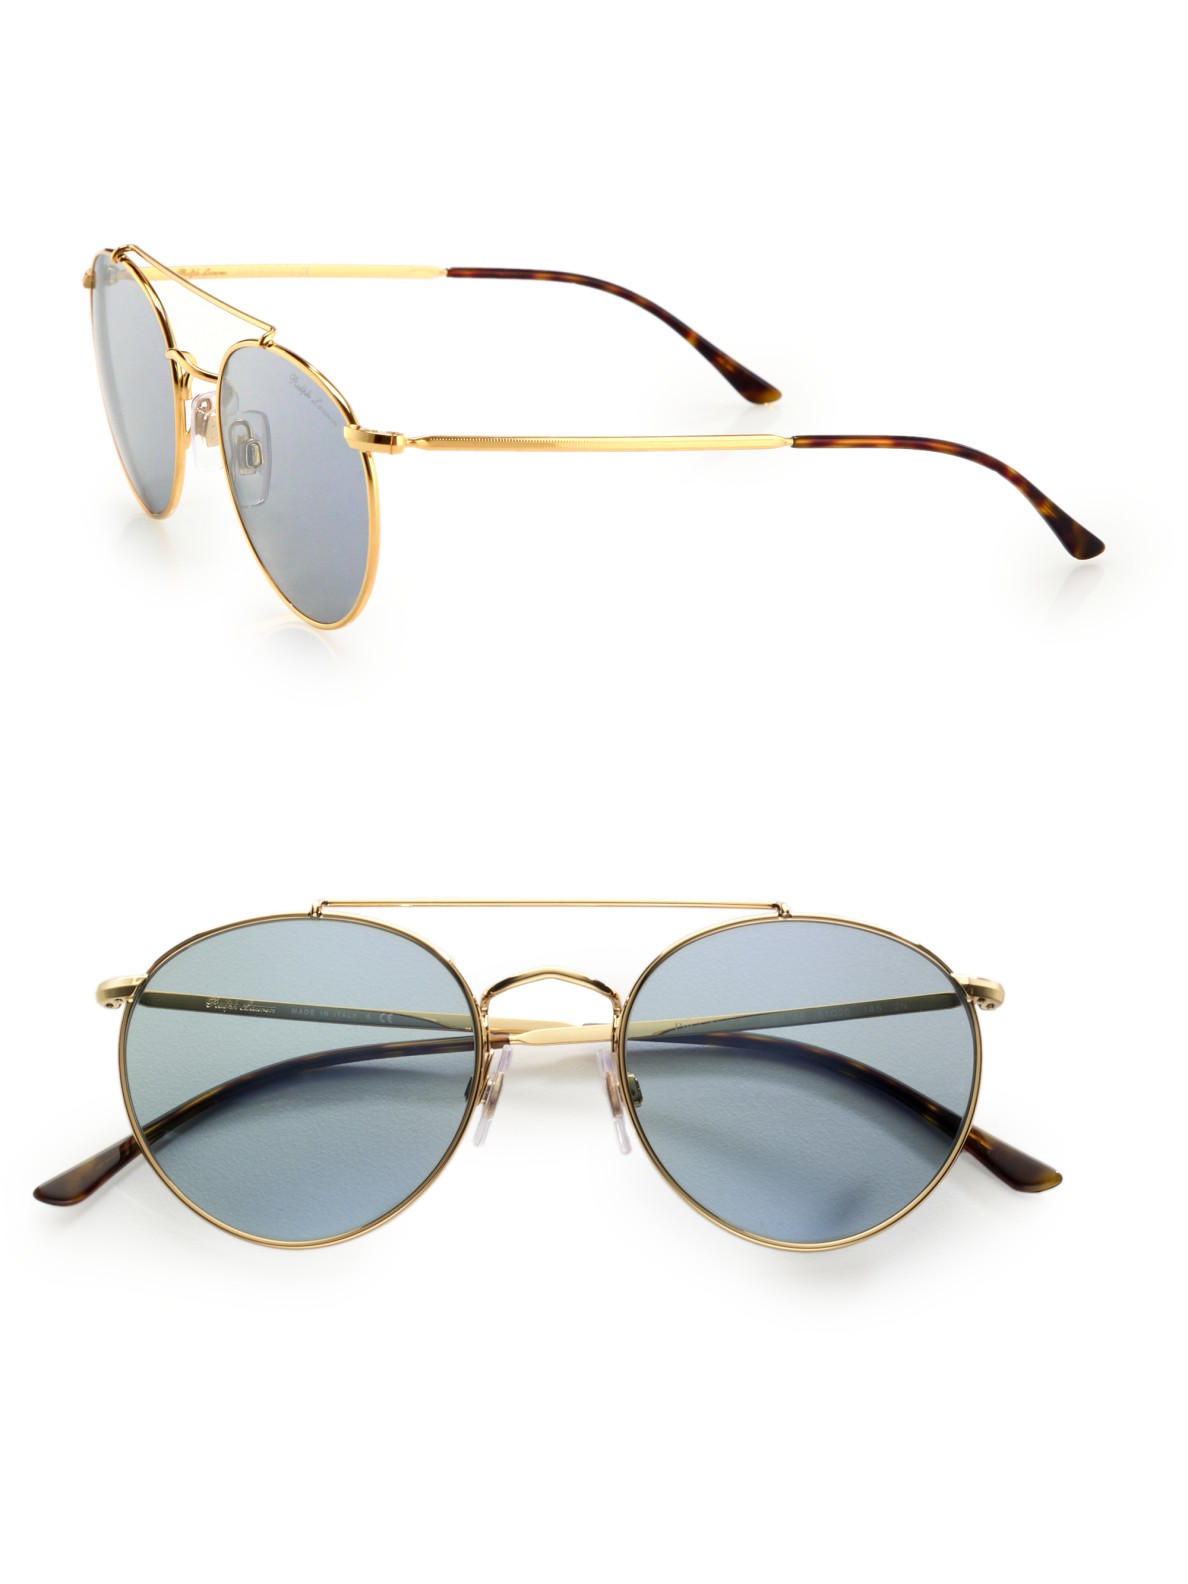 Ralph Lauren Round Vintage Sunglasses In Gold For Men Lyst 